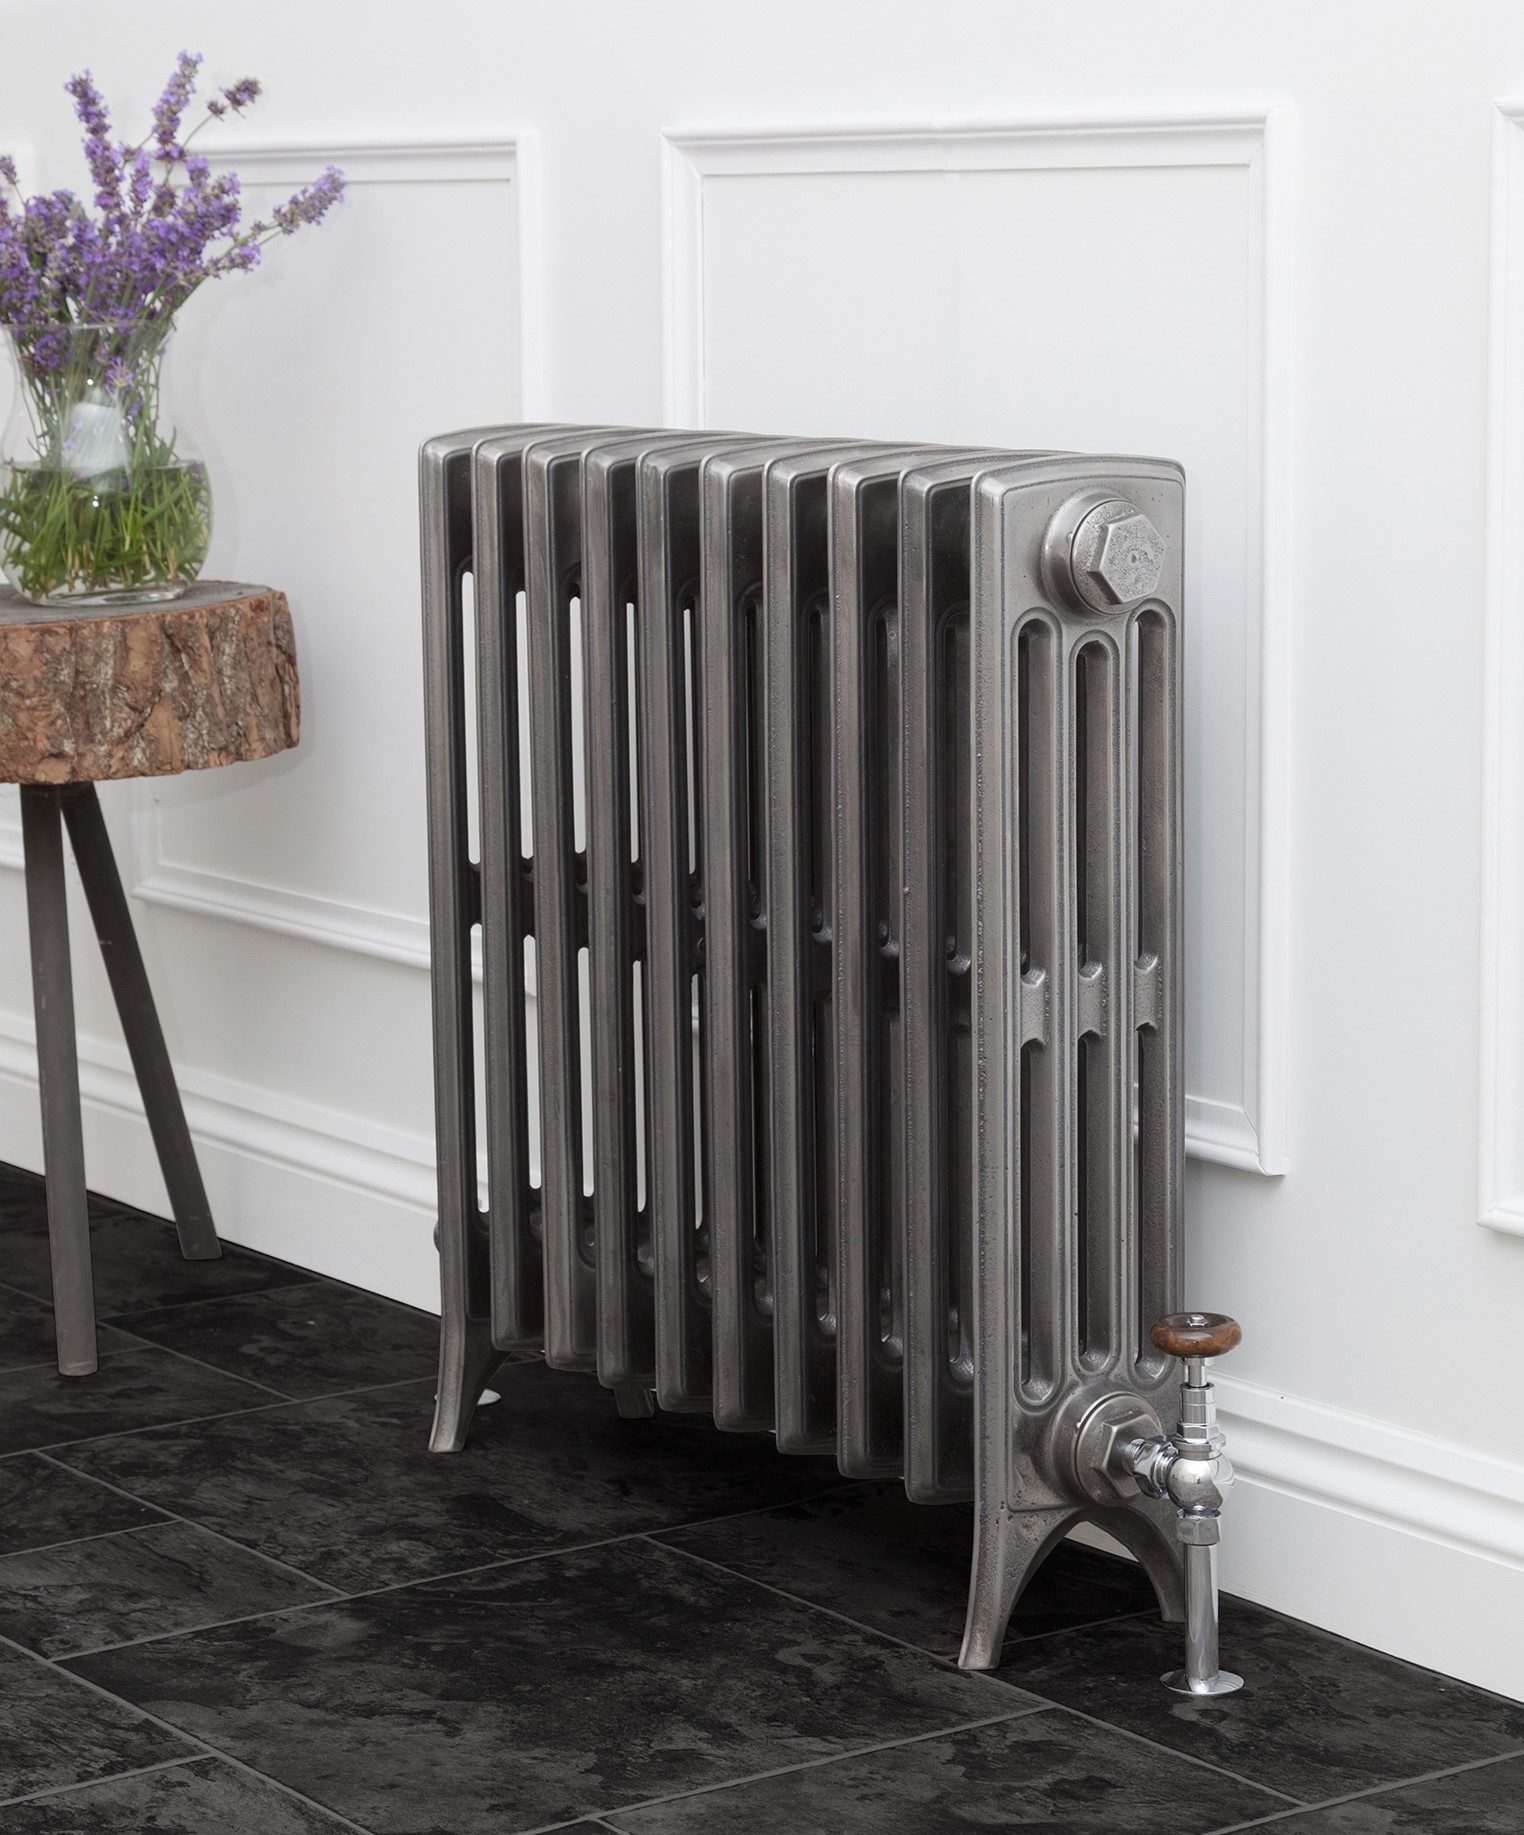 Carron cast iron radiators in the 4 Column Rathmell style